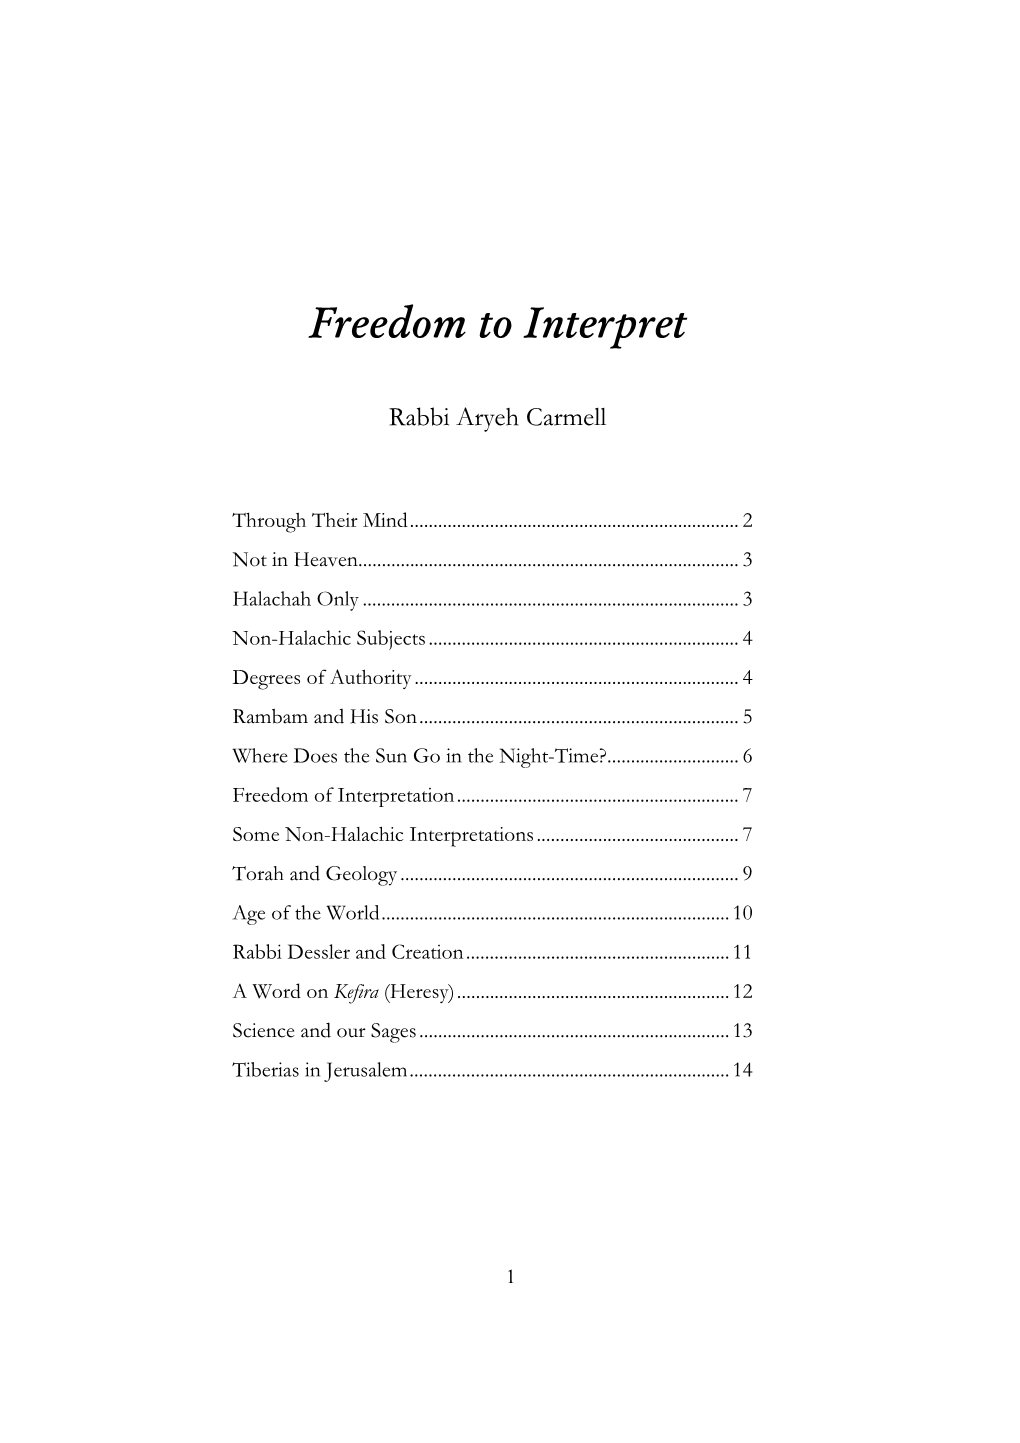 Freedom to Interpret by Rabbi Aryeh Carmell